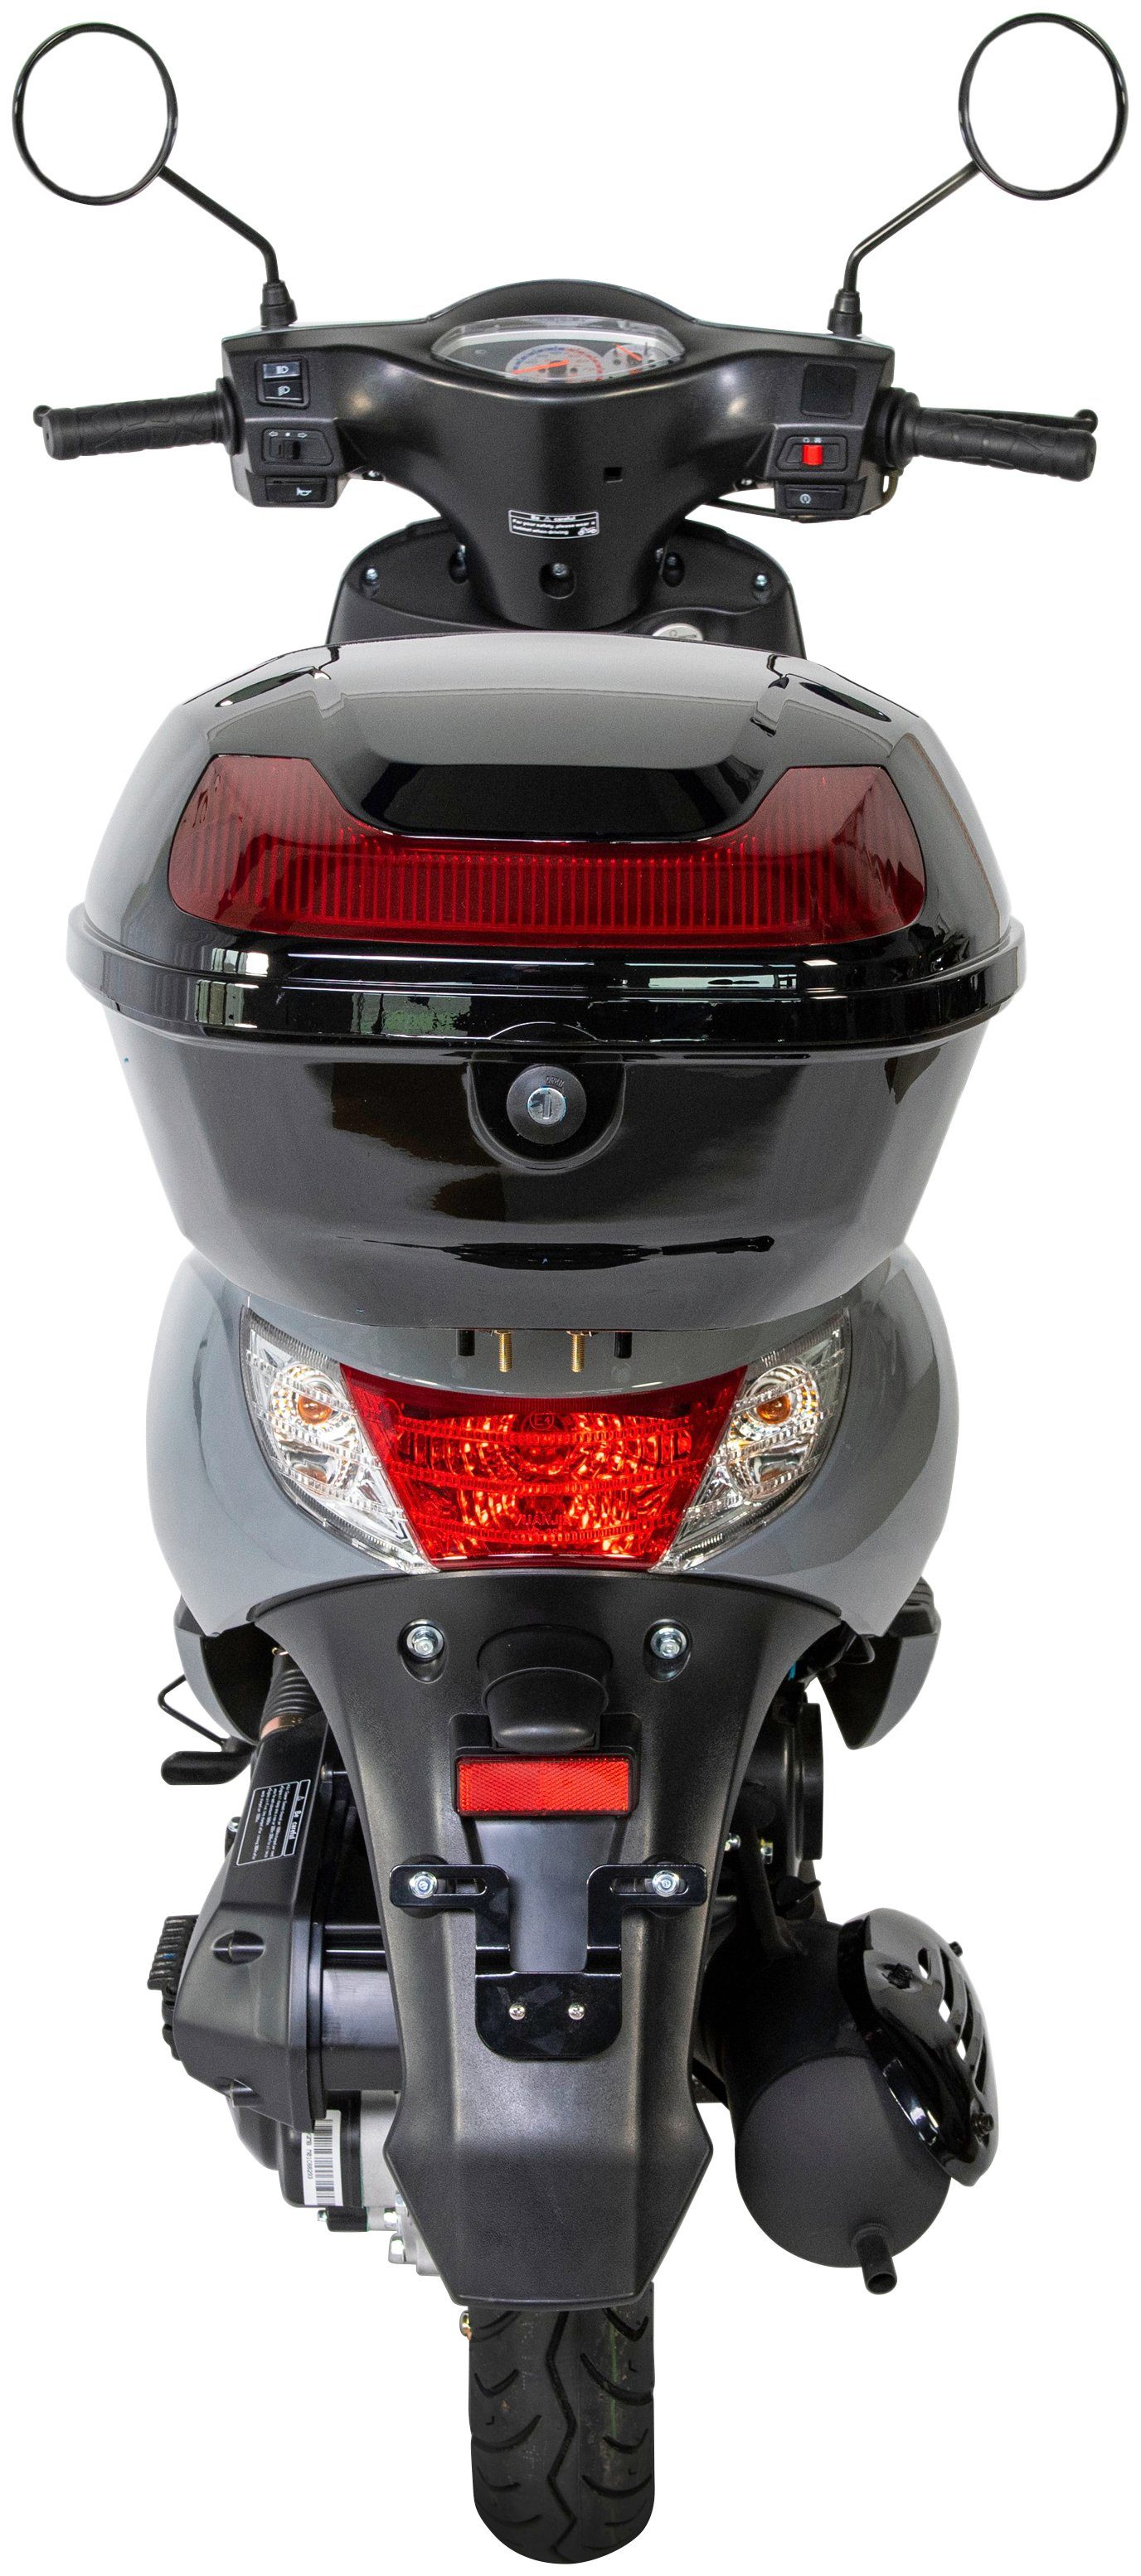 50-45, 5, GT tlg., inkl. Matteo UNION Topcase Motorroller Euro grau grau, 2 Topcase), 50 mit (Komplett-Set, 45 km/h, ccm,